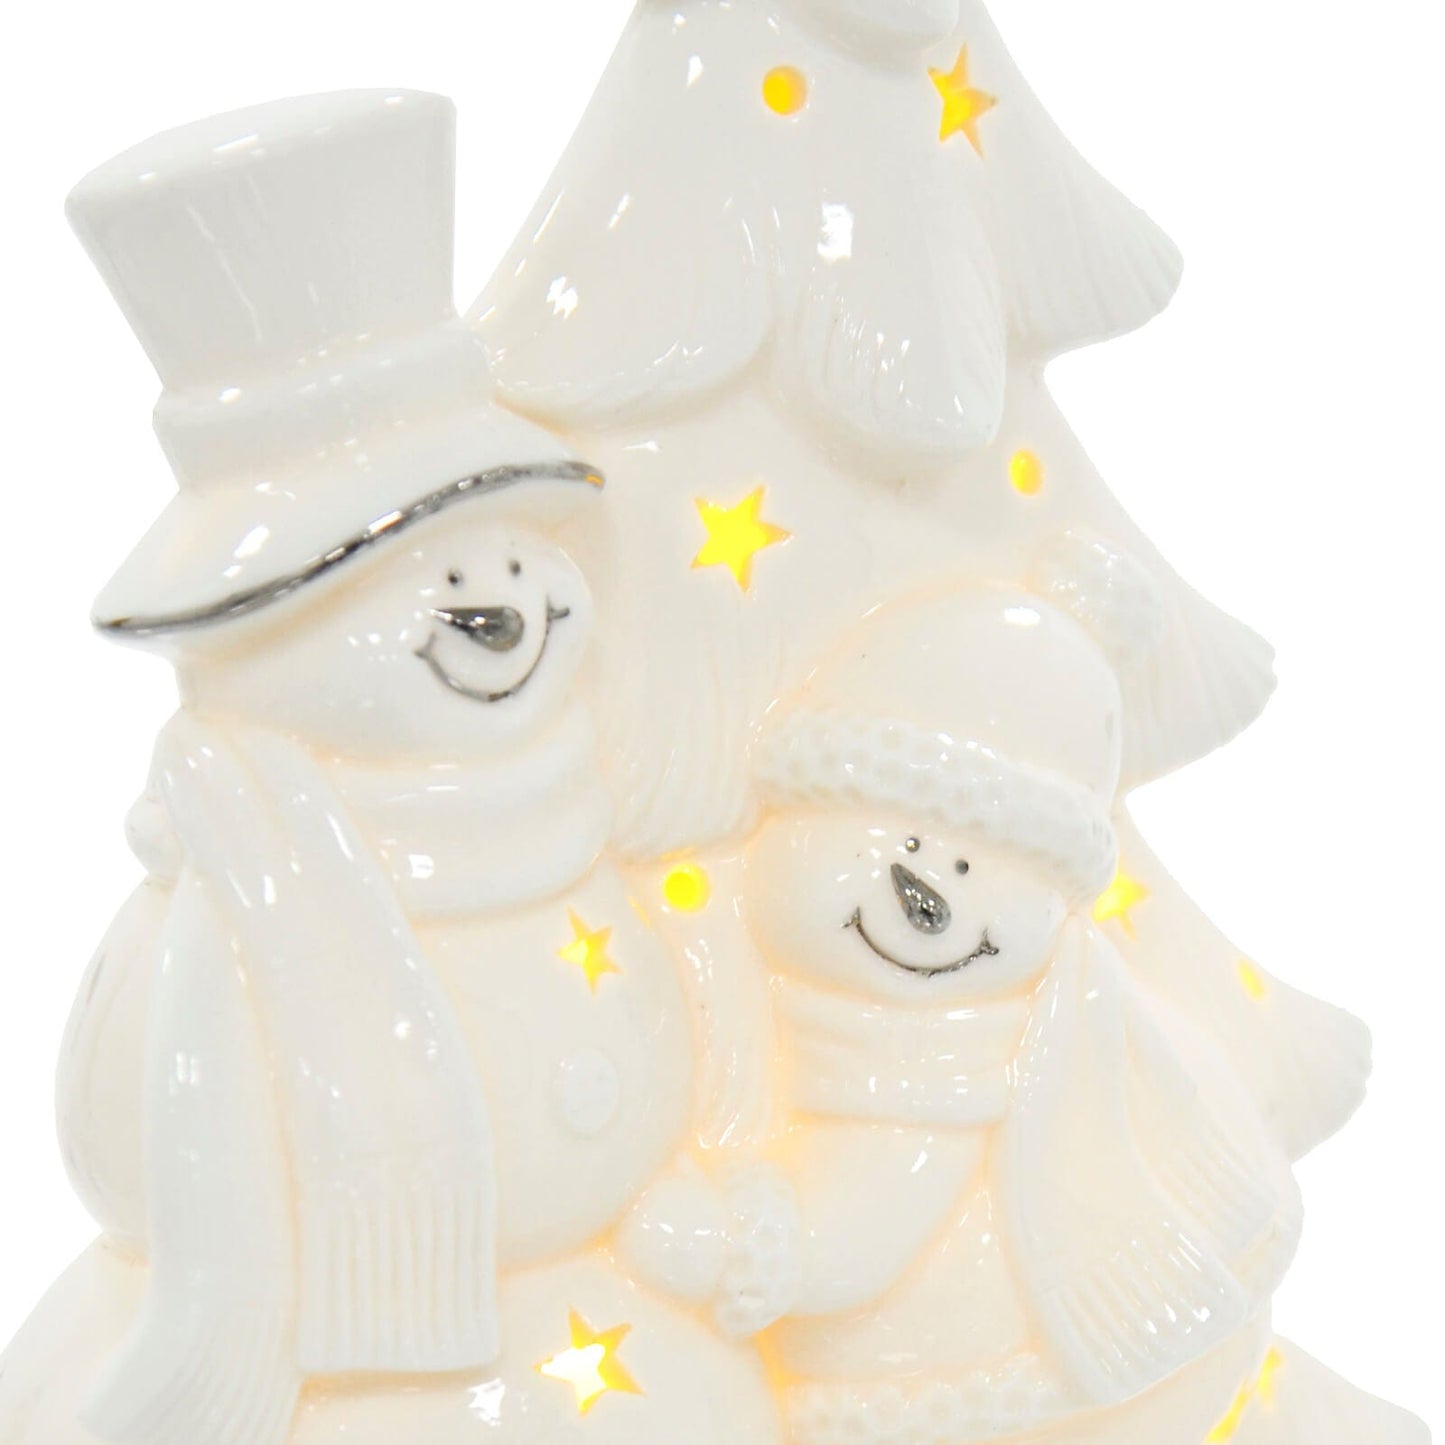 Mr Crimbo LED Snowman With Christmas Tree Decoration White  23cm